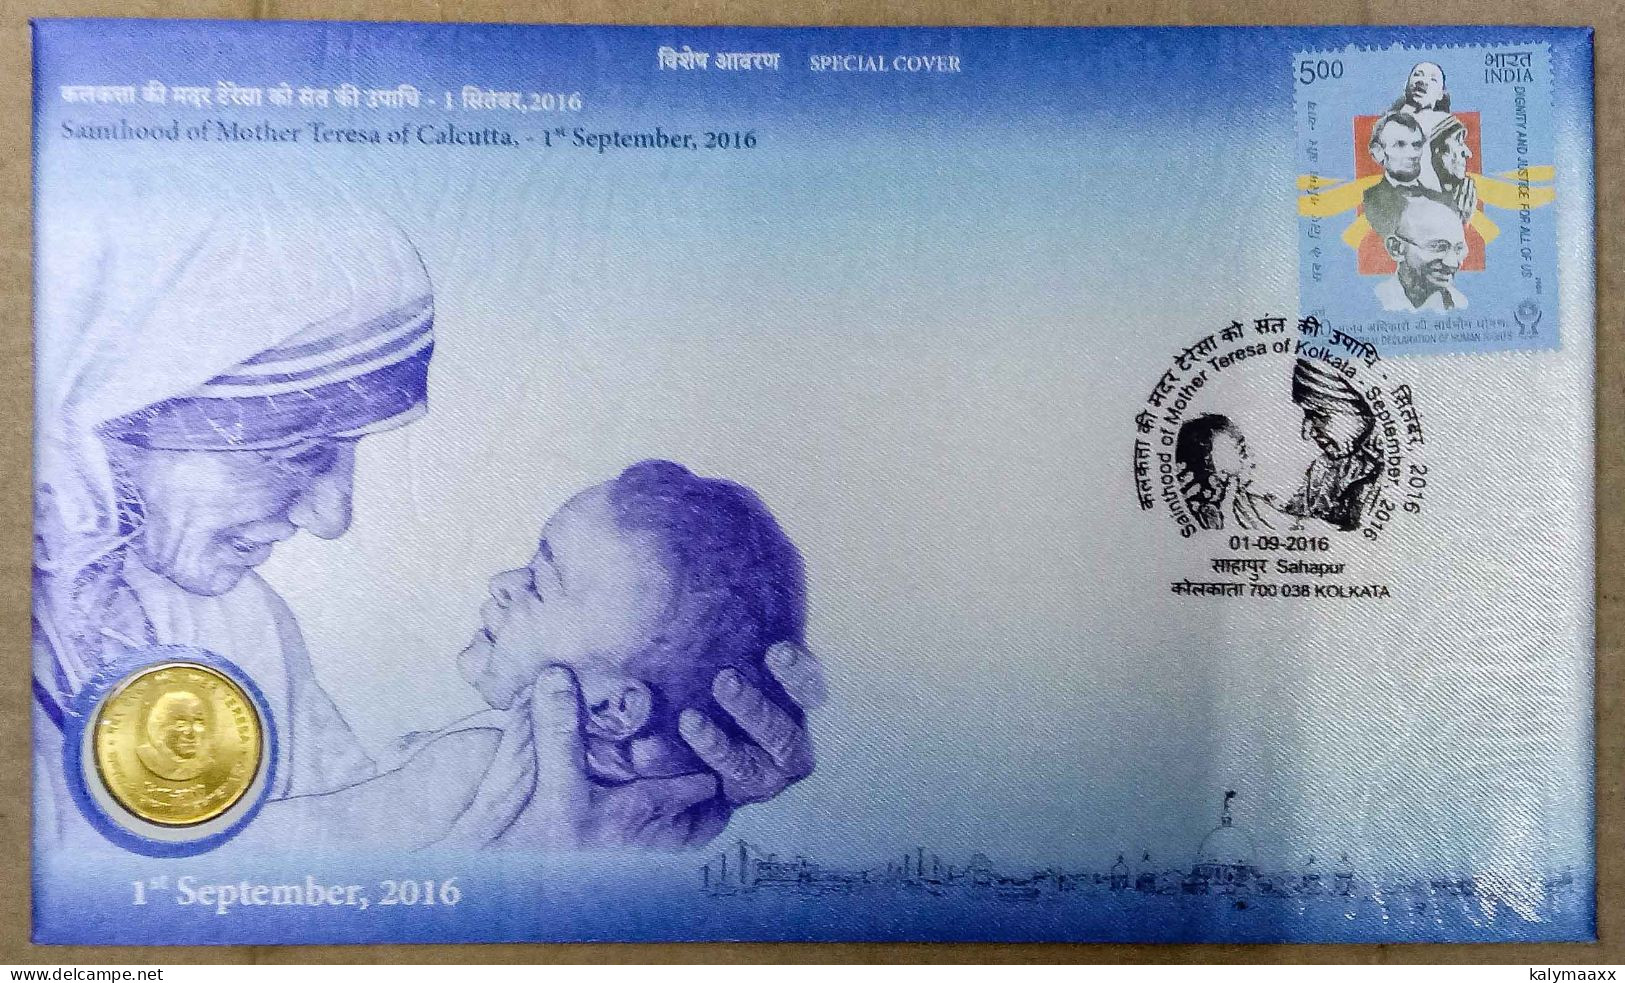 INDIA 2016 SAINTHOOD OF MOTHER TERESA, SPECIAL COIN COVER OF MOTHER TERESA, SPECIAL COVER, LIMITED ISSUE - Mother Teresa